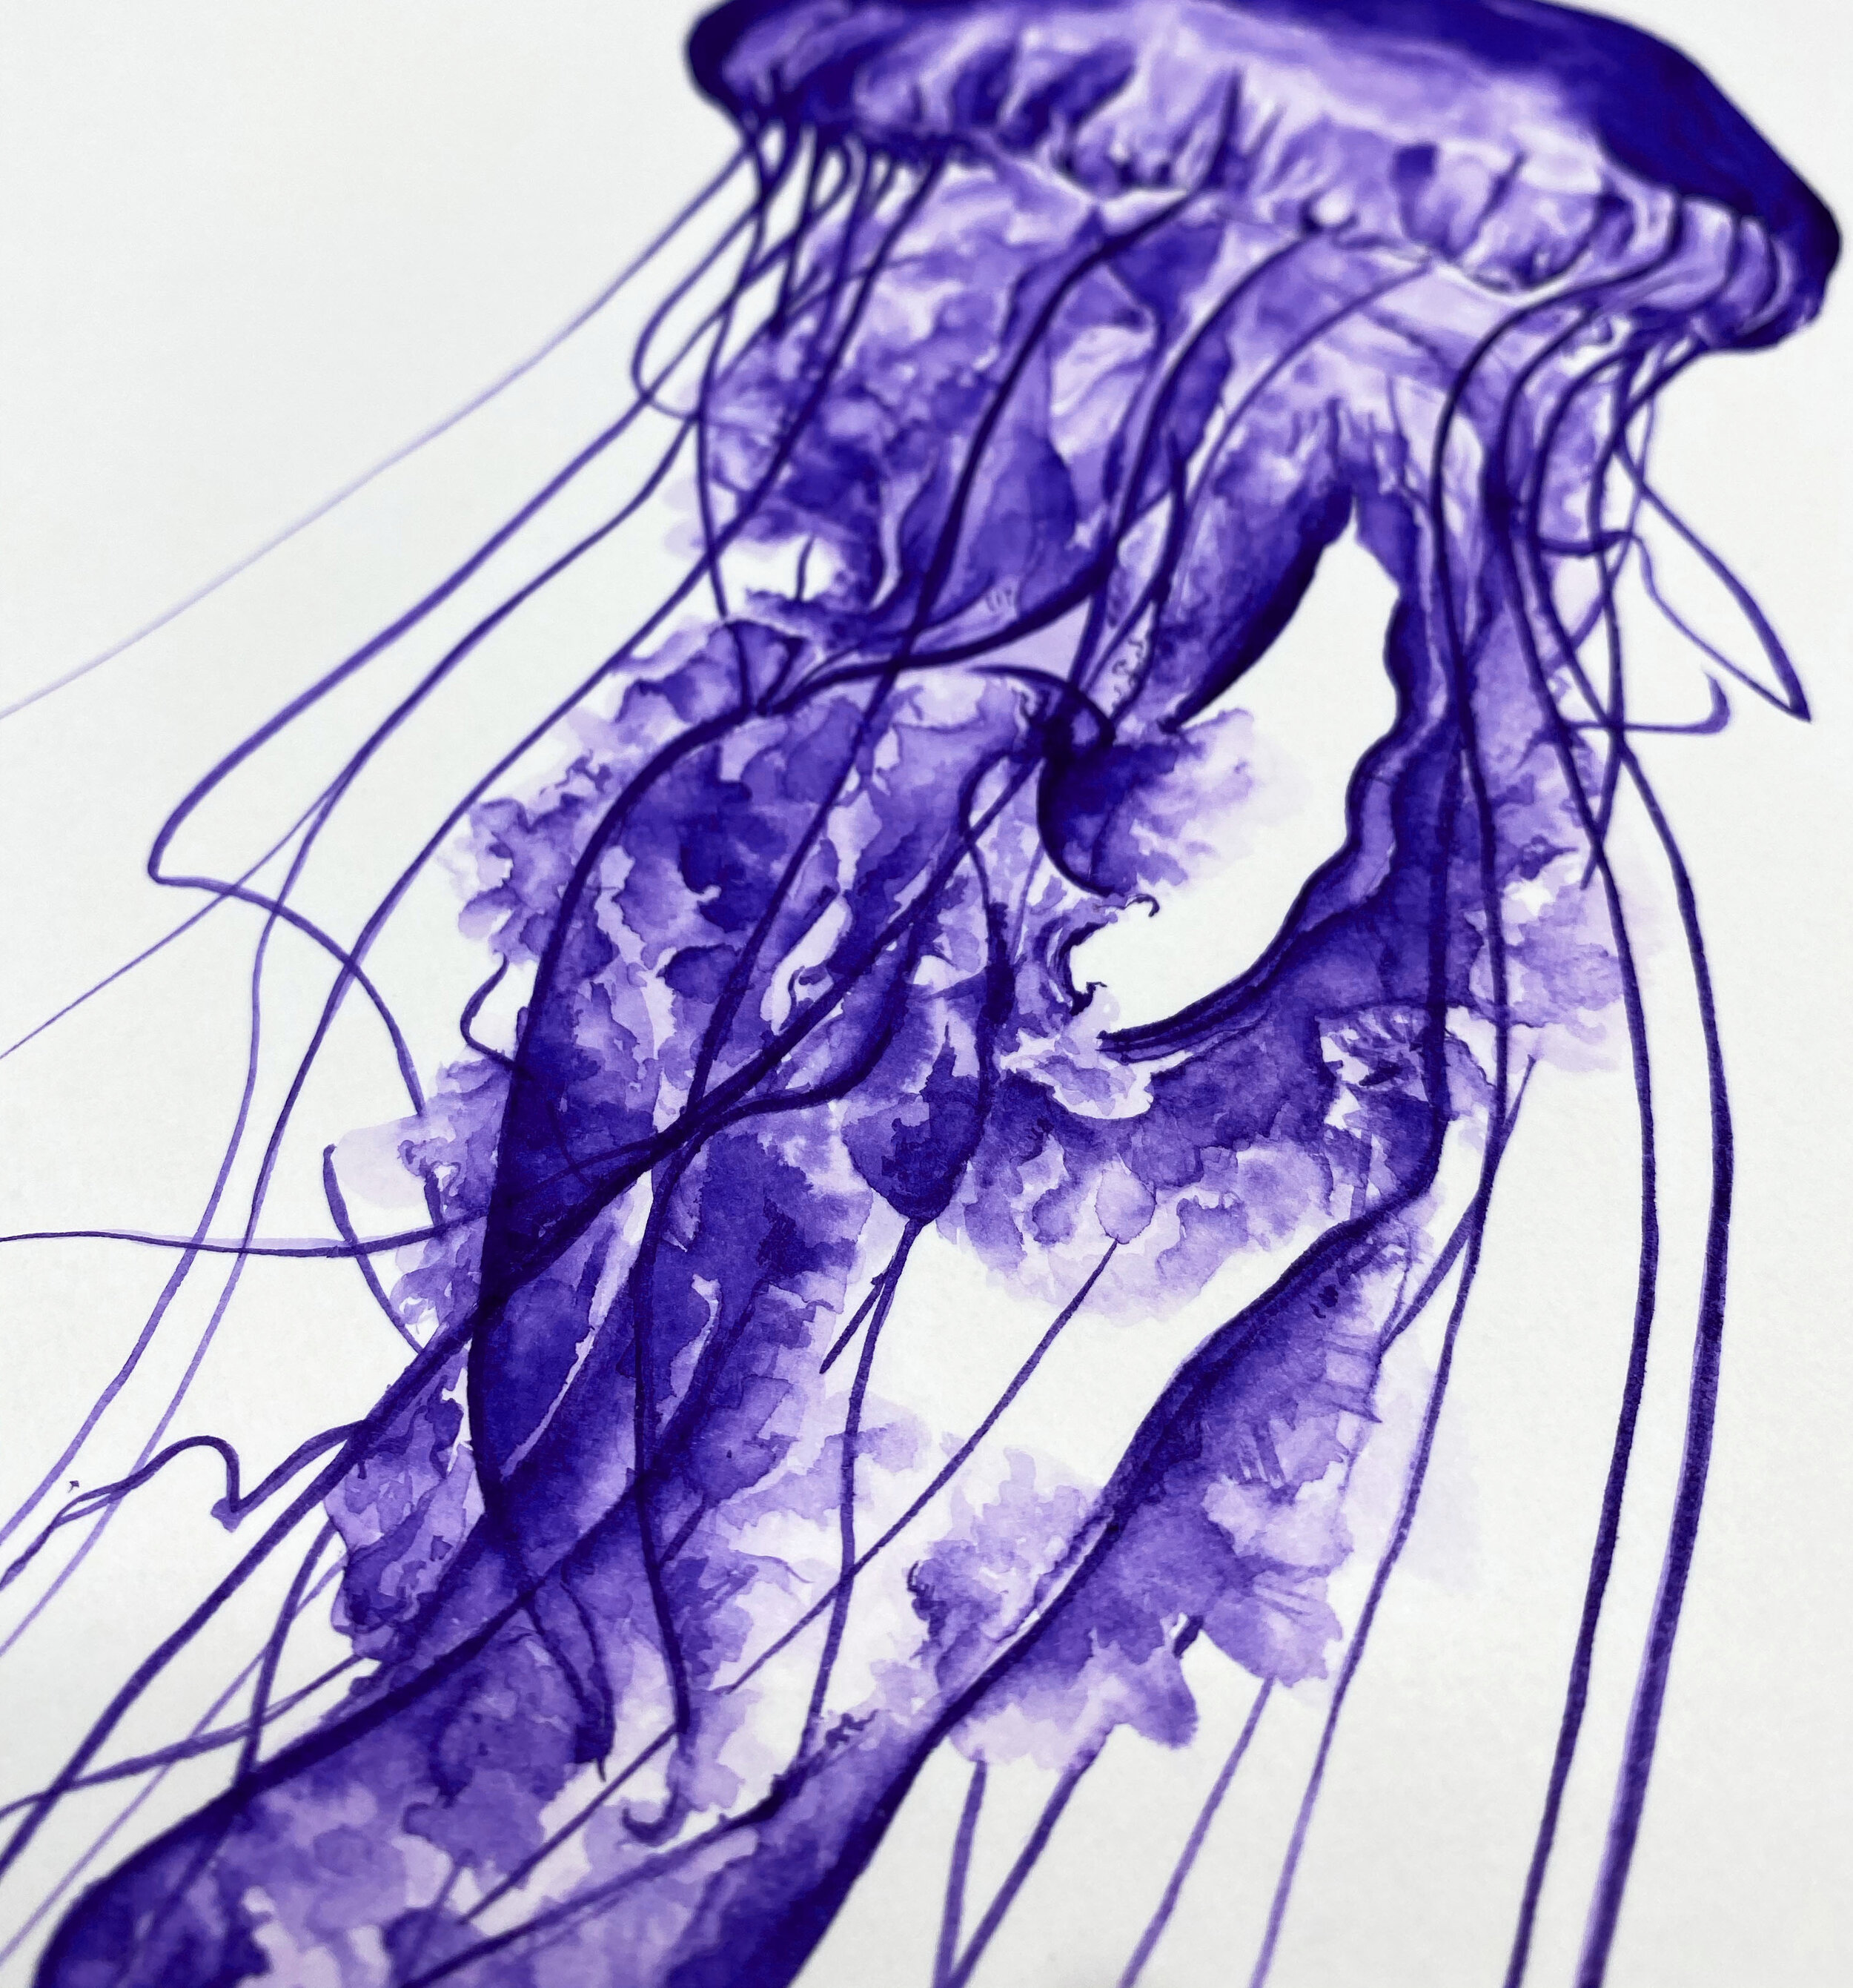 Blue Jellyfish close-up.jpg